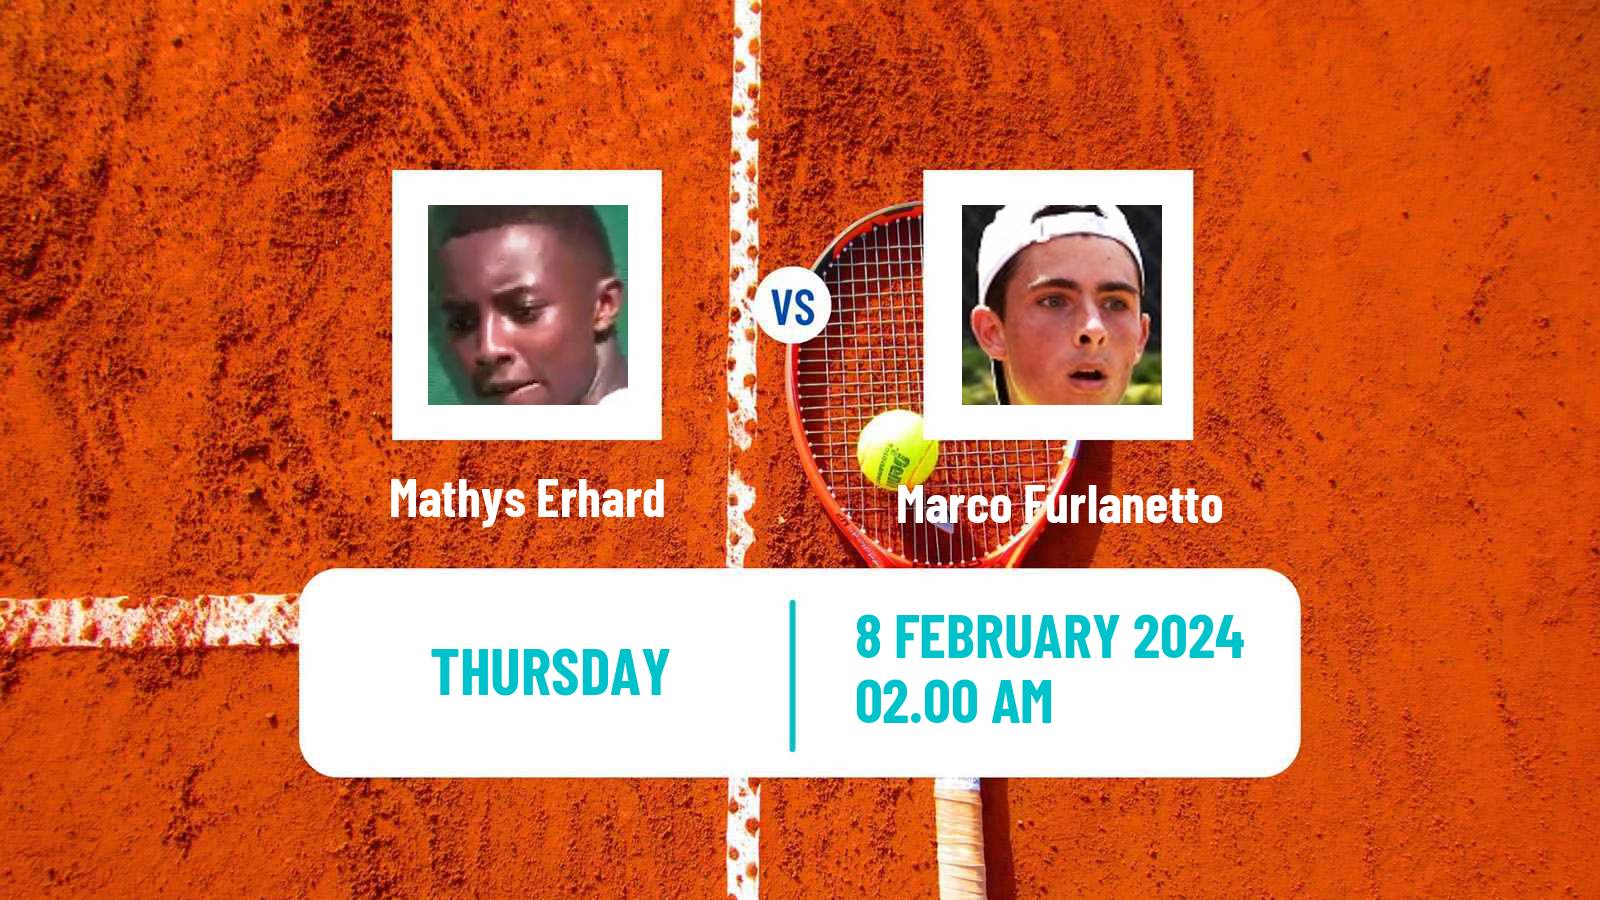 Tennis ITF M25 Antalya 2 Men Mathys Erhard - Marco Furlanetto